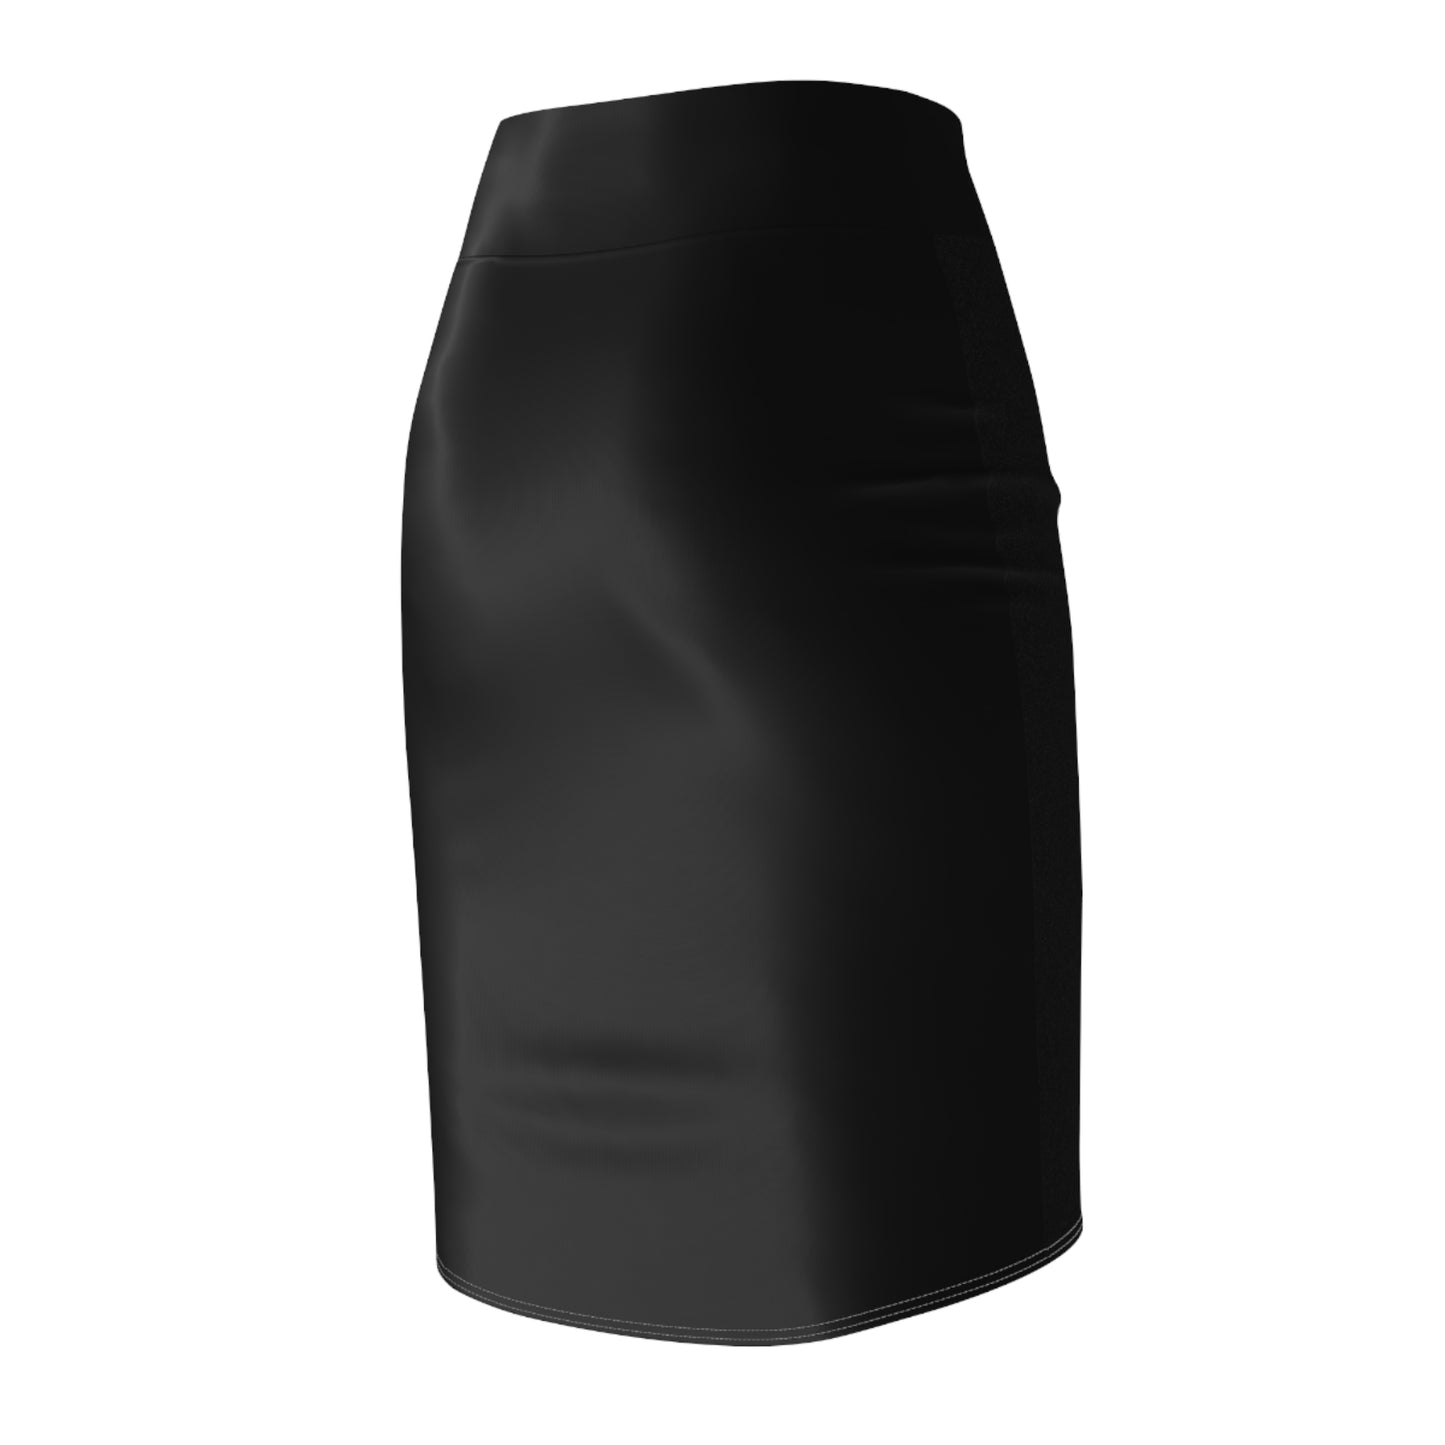 Solid Black Women's Pencil Skirt (AOP), High Quality & Stylish Pencil Skirt